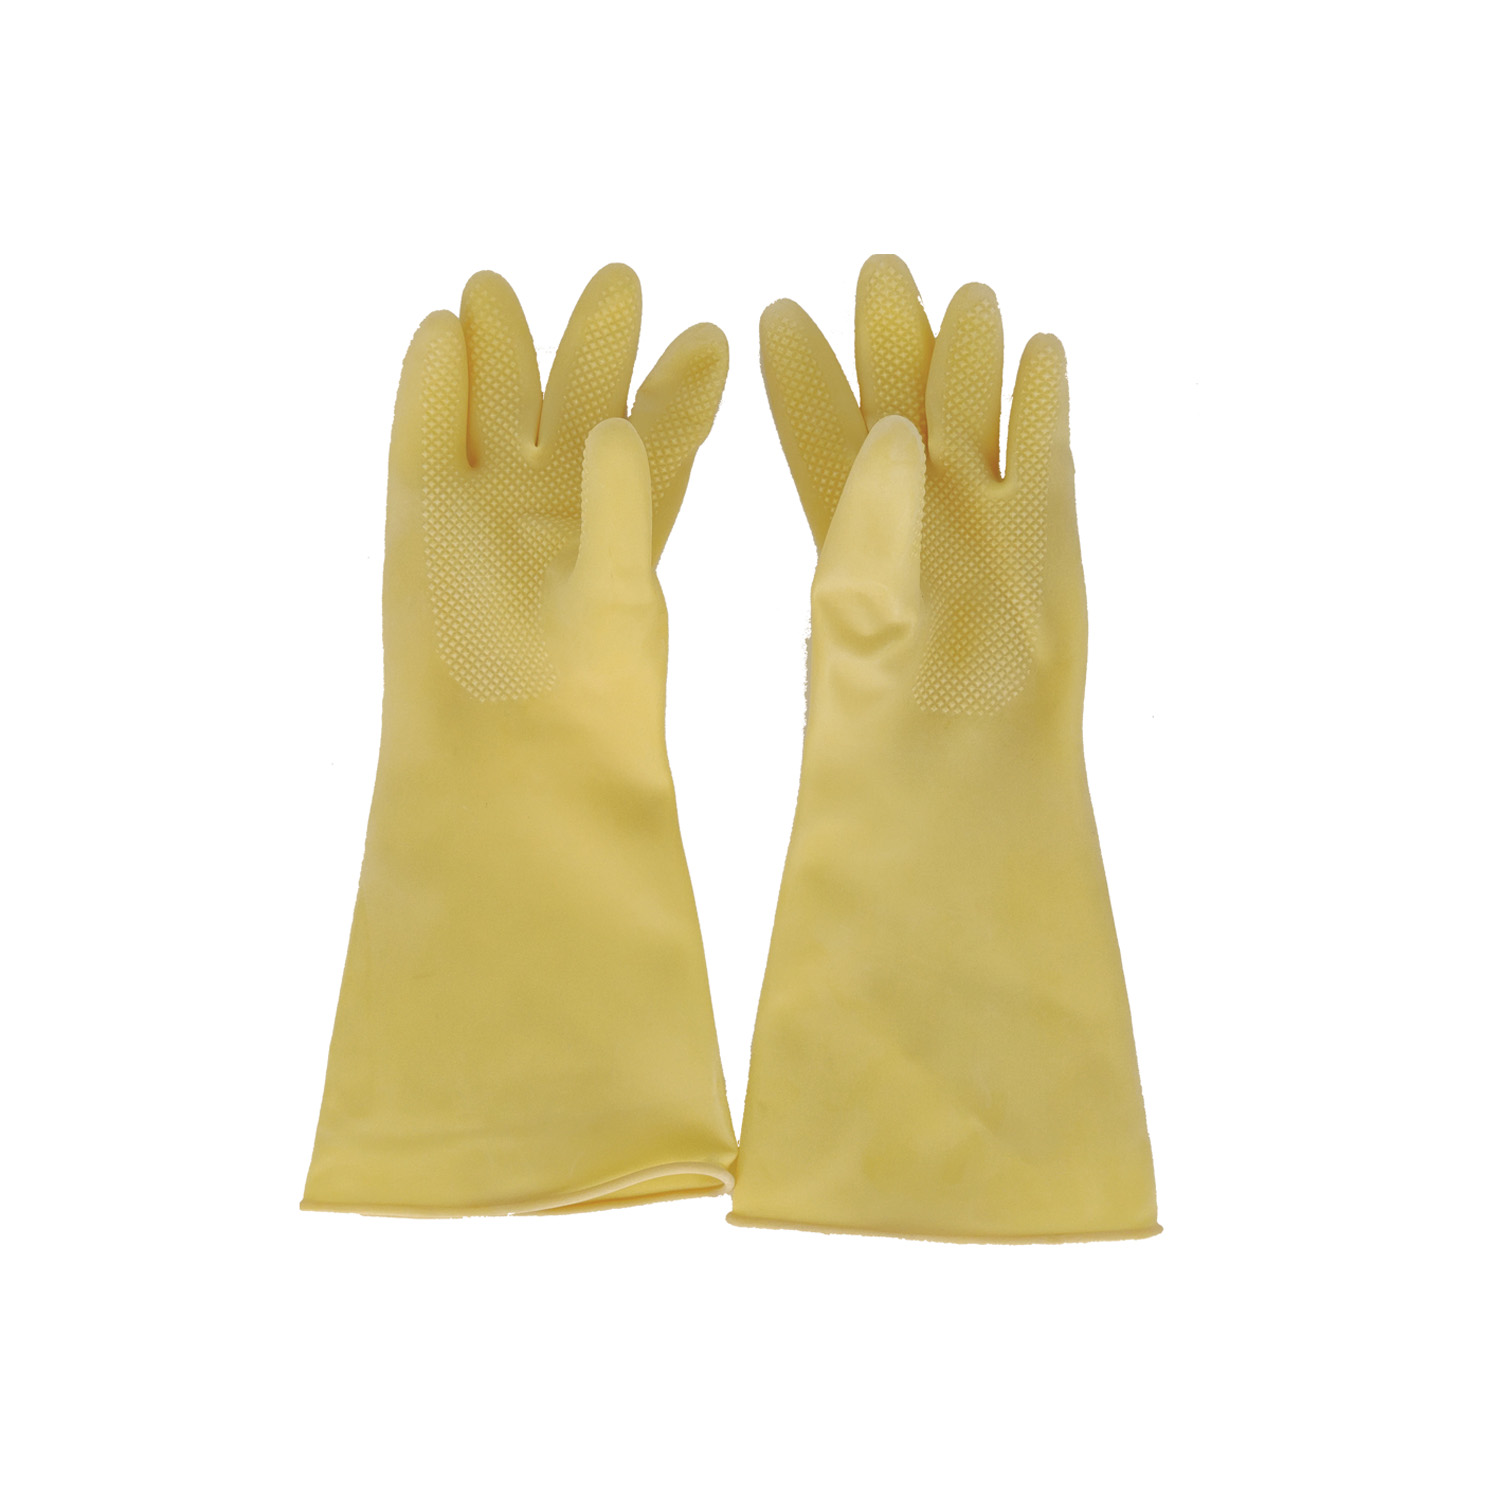 CAC China GLLX-2YM Yellow Latex Gloves, Medium - pr